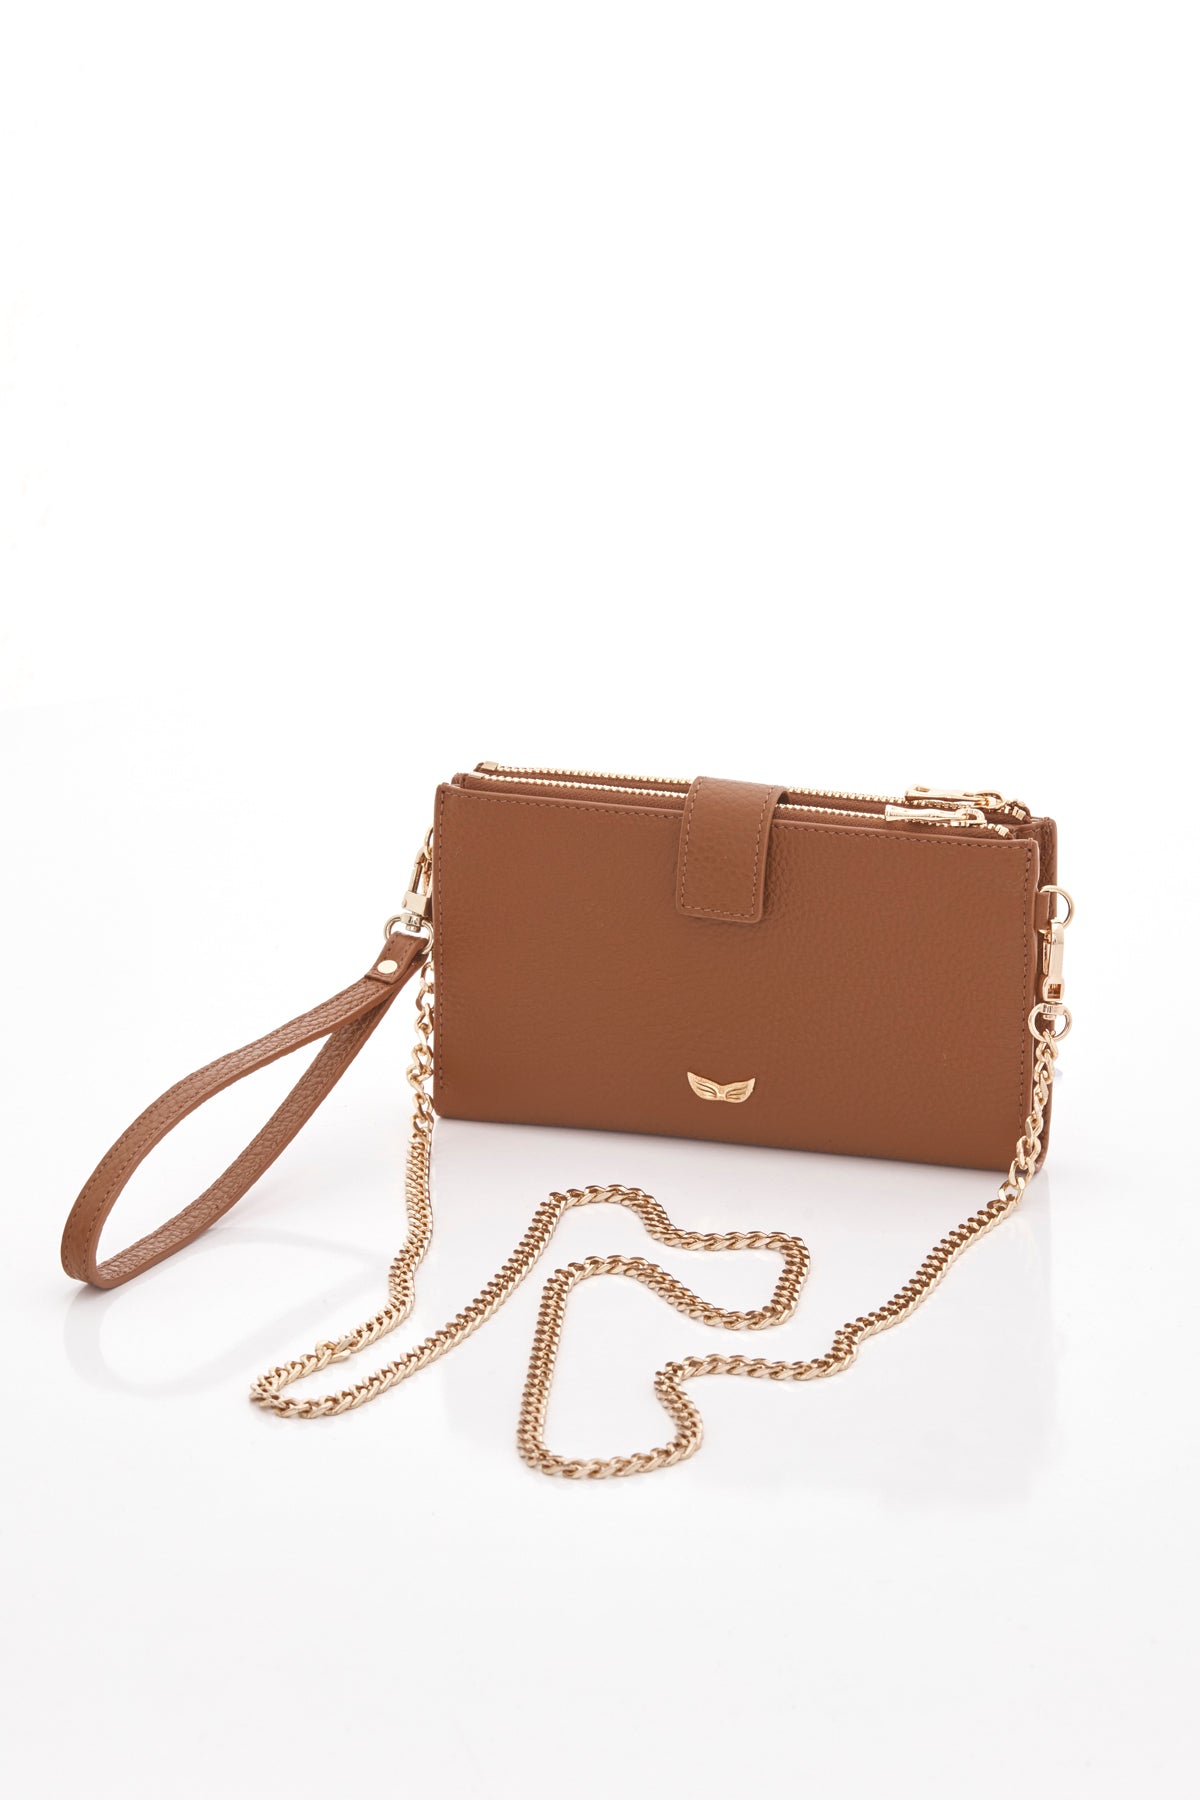 caramel brown ouroboros genuine leather women's crossbody bag back